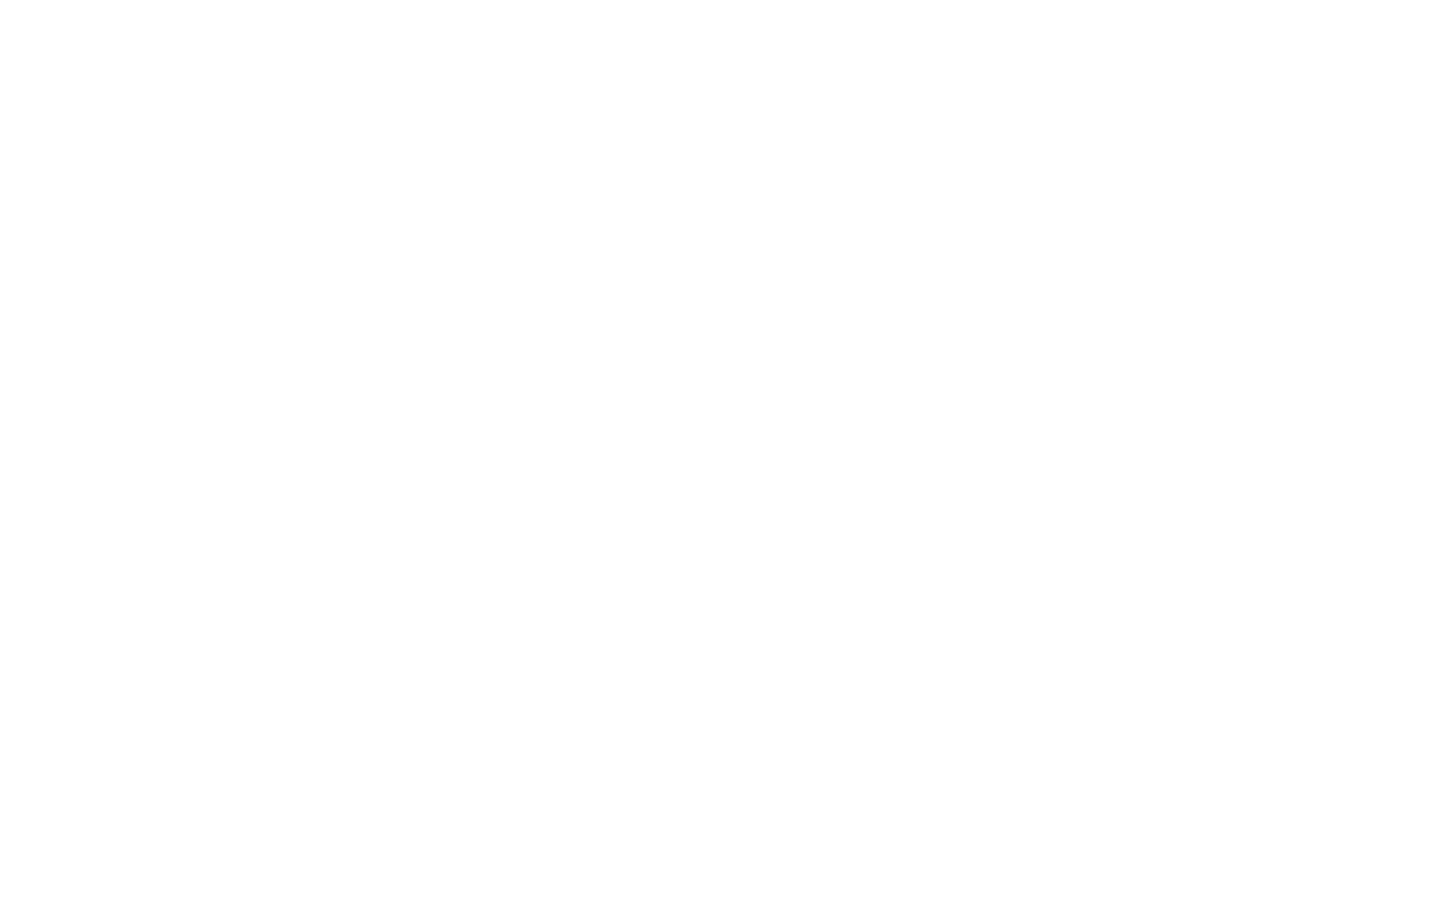 Proximus logo